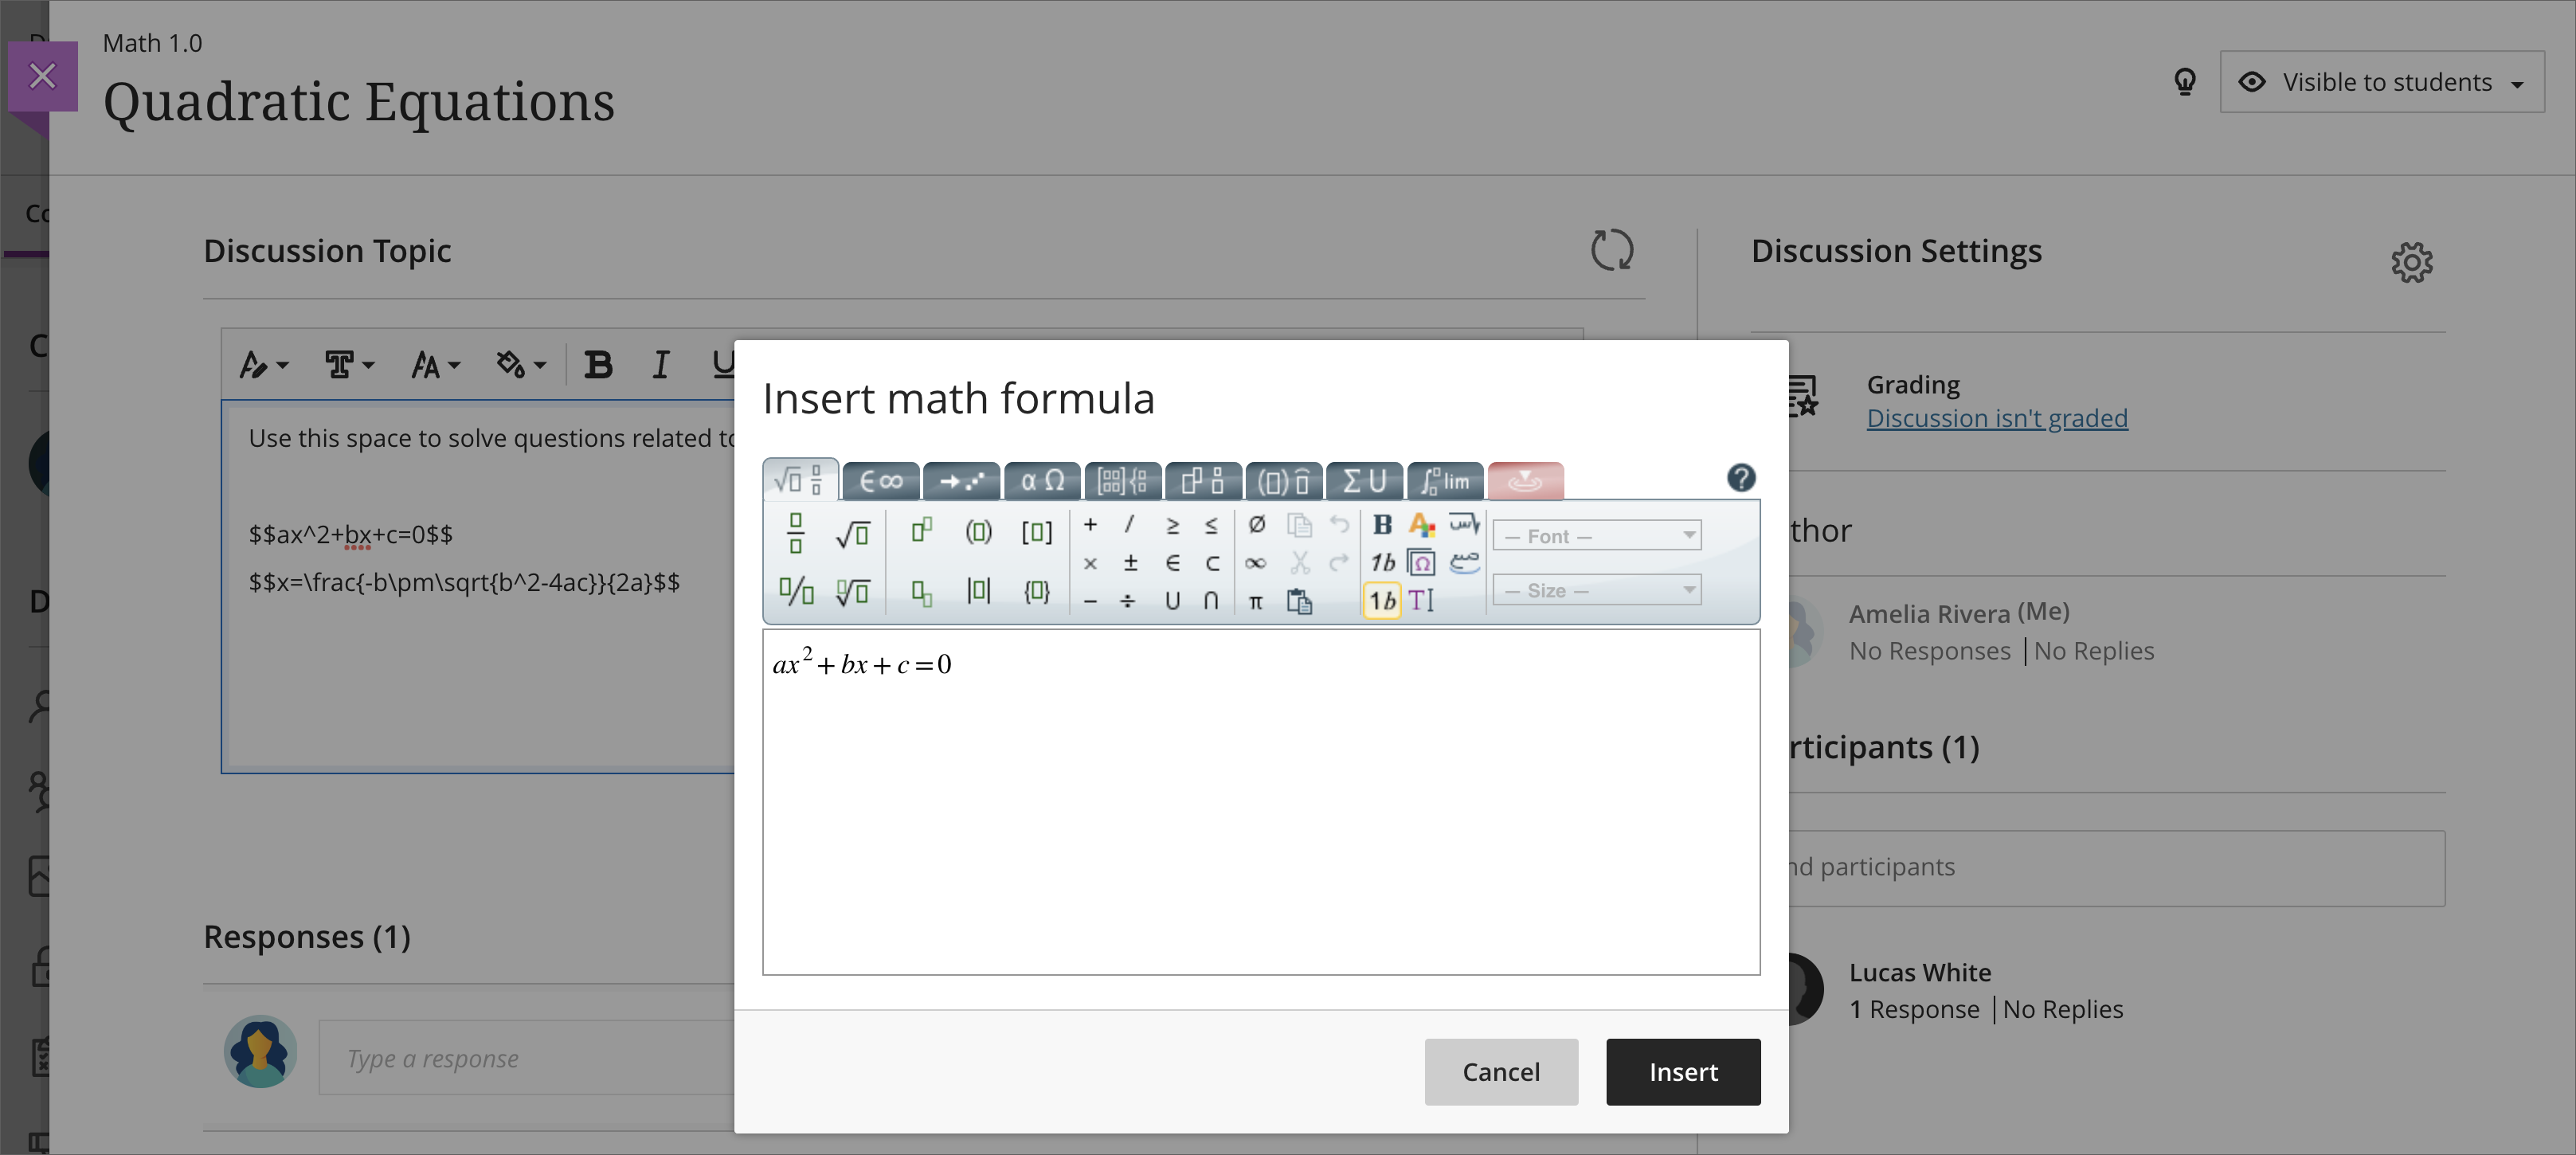 LaTeX equation edited as formula using math editor